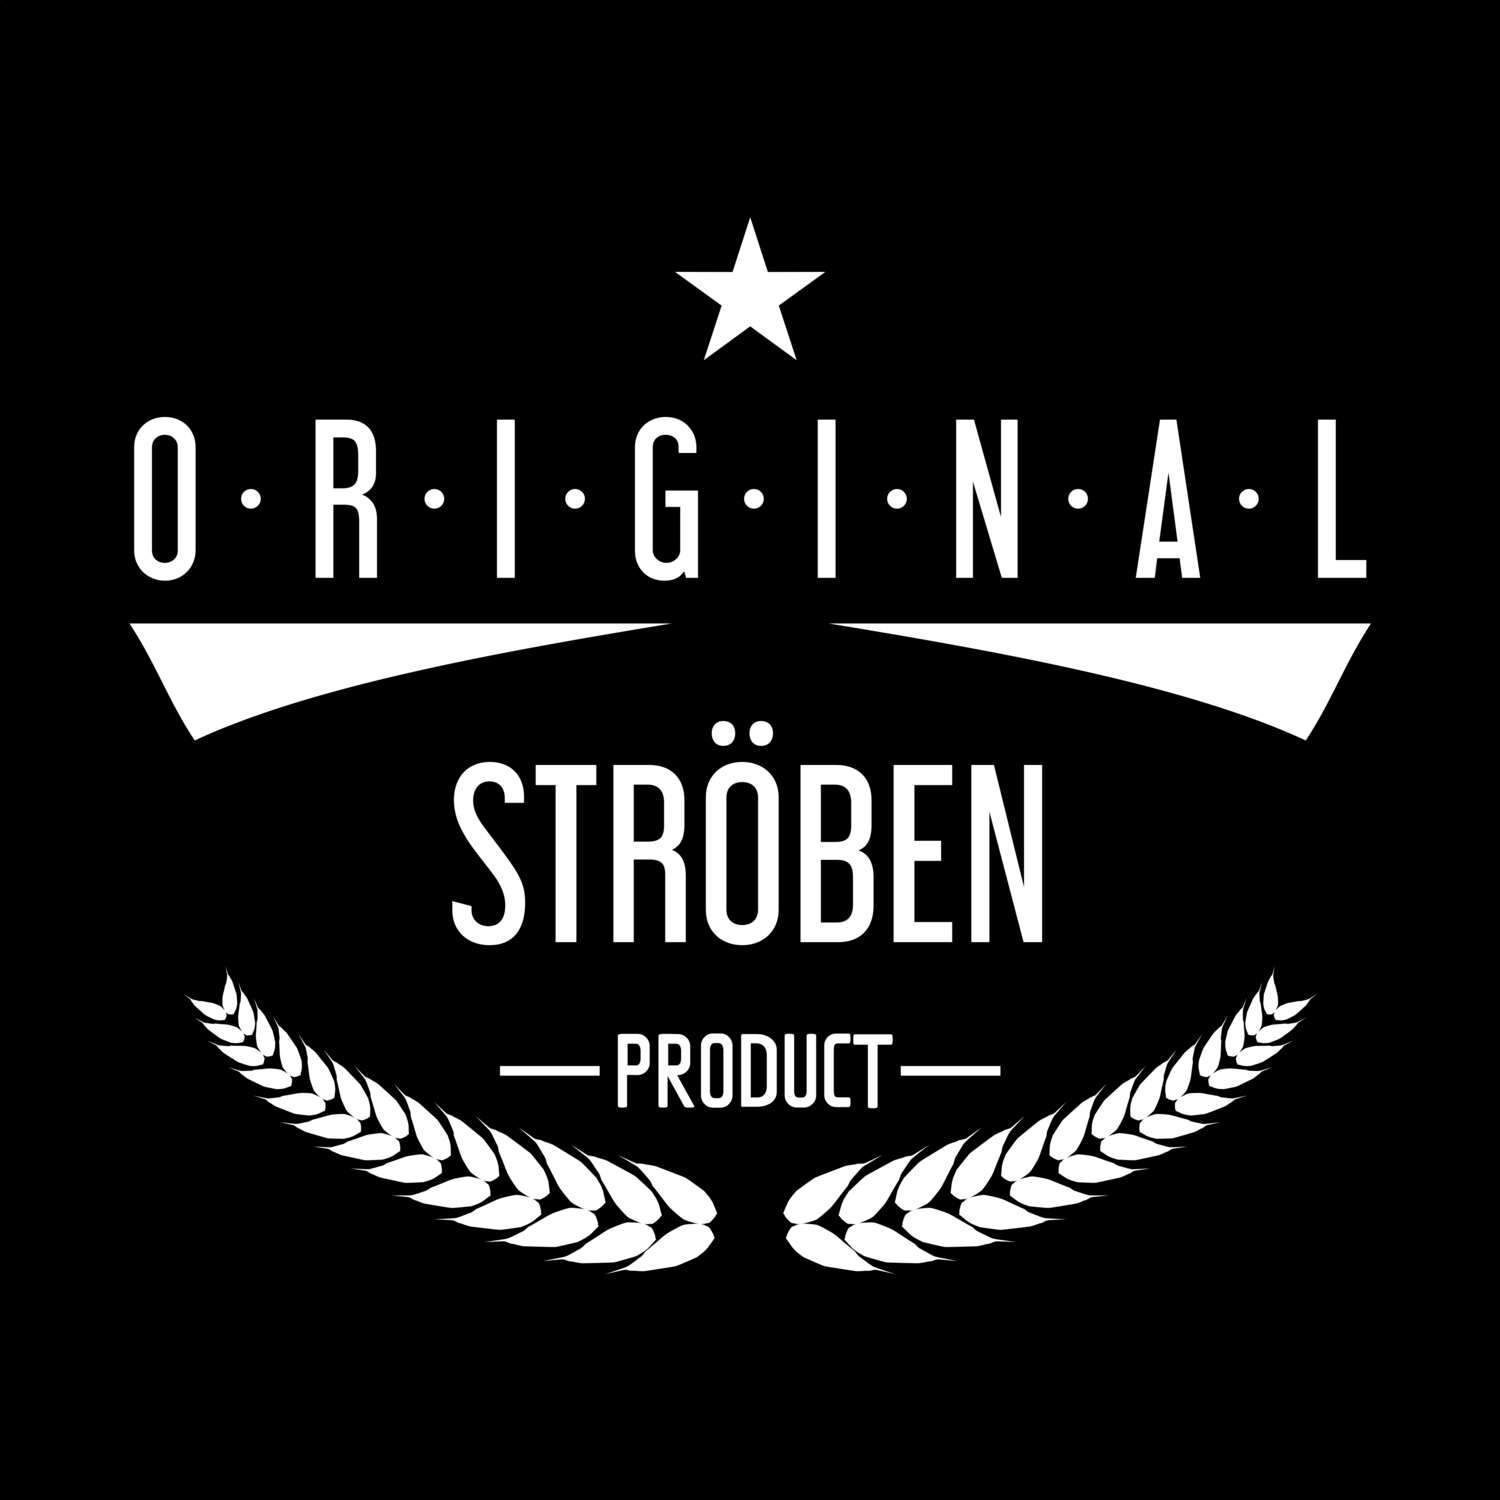 Ströben T-Shirt »Original Product«